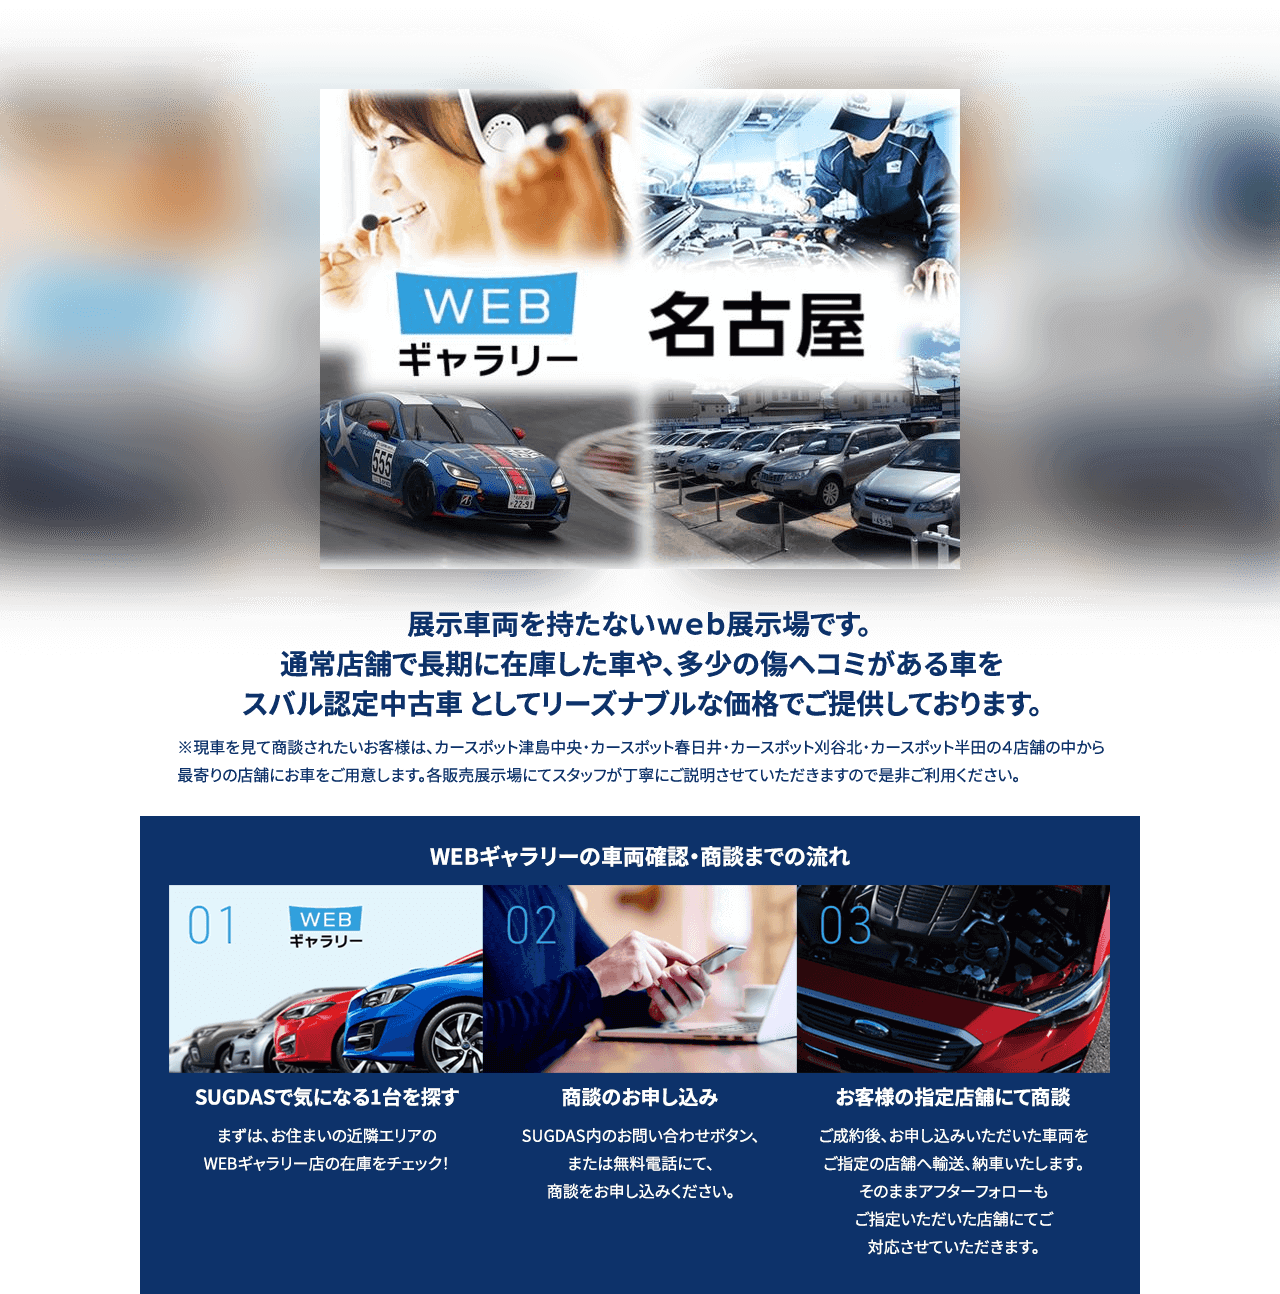 WEBギャラリー名古屋展示車両を持たないWEB展示場です。通常店舗で長期に在庫した車や、多少の傷ヘコミがある車をスバル認定中古車 としてリーズナブルな価格でご提供しております。WEBギャラリーの車両確認・商談までの流れ